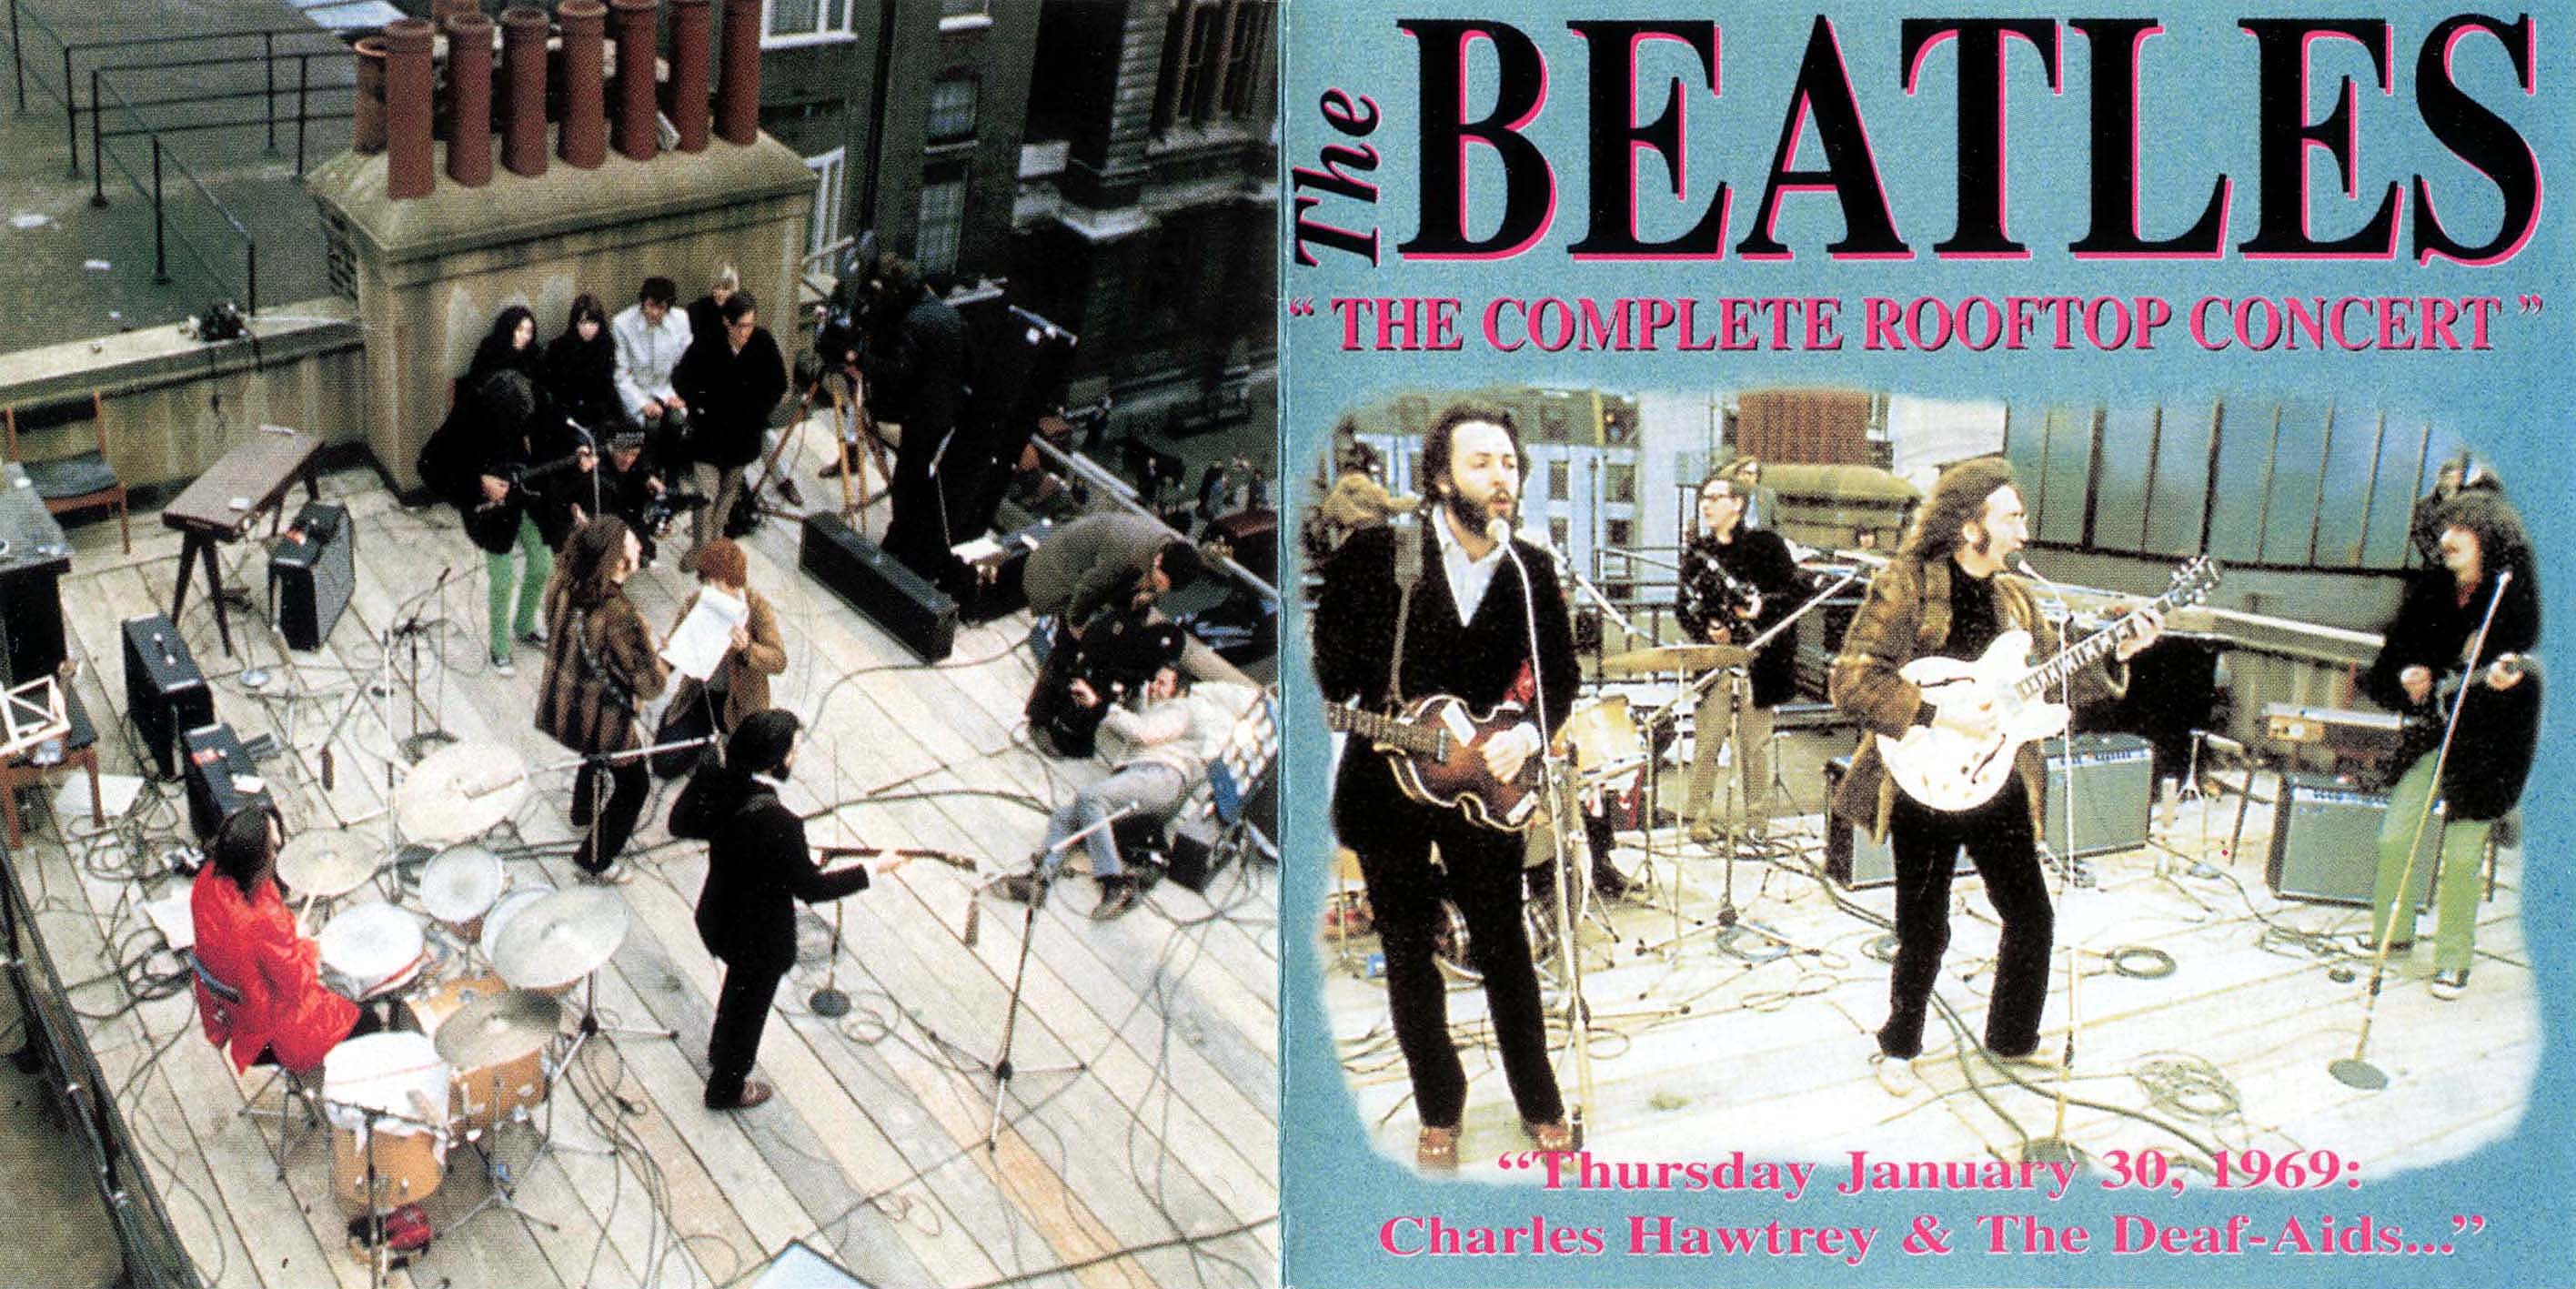 The Beatles Get Back Rooftop Concert.